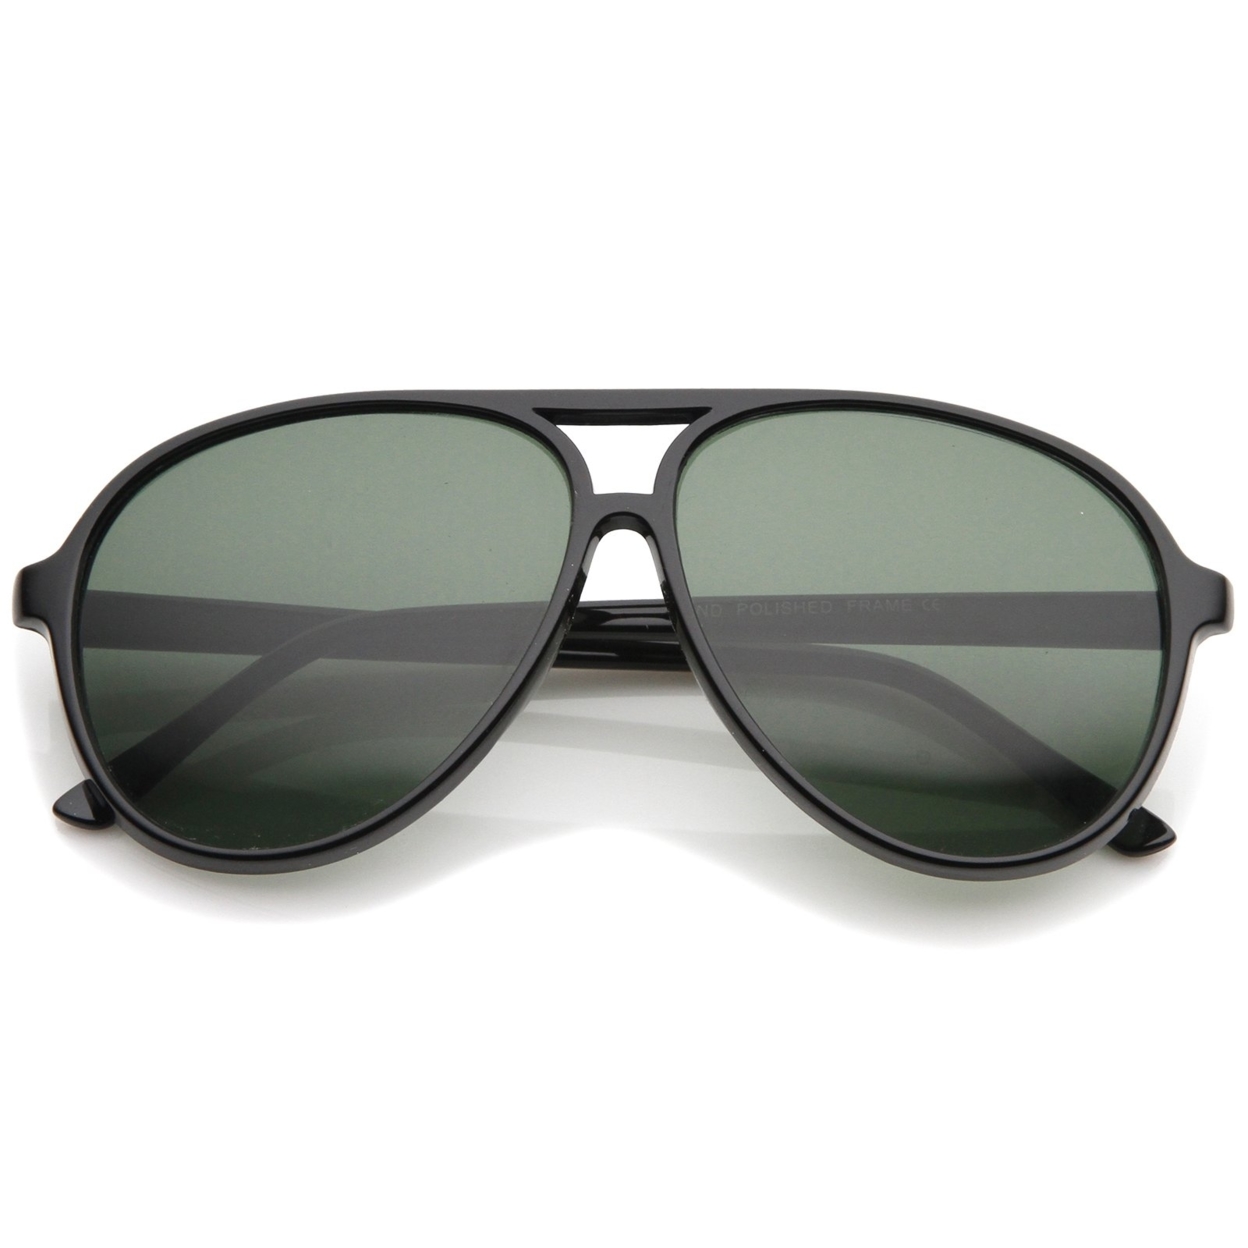 Retro Flat Top Teardrop Shaped Neutral Colored Lens Aviator Sunglasses 59mm - Black / Green